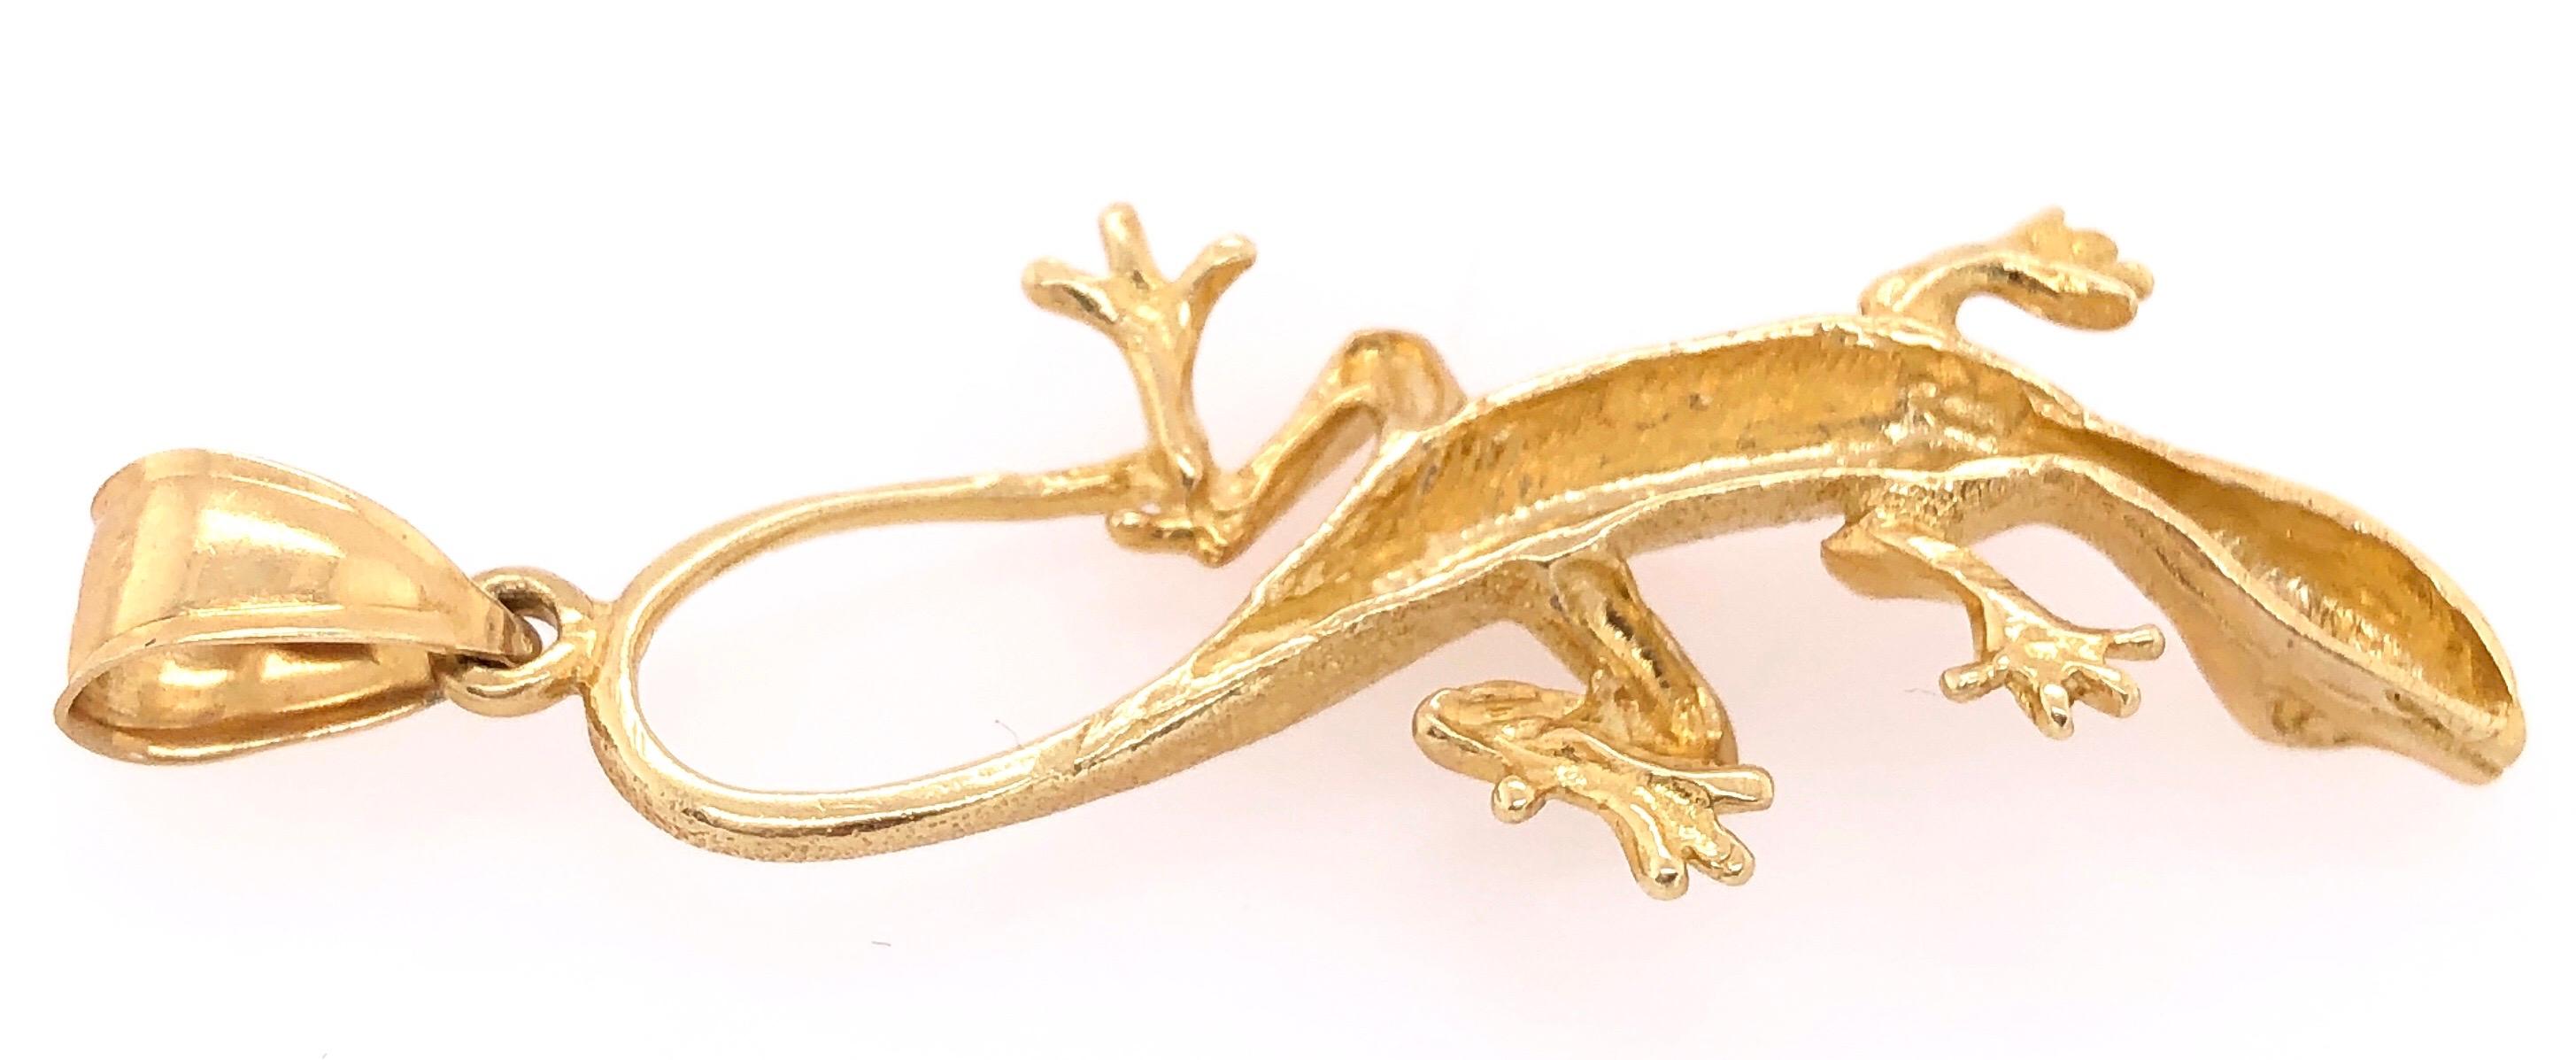 14 Karat Yellow Gold Gecko Charm Pendant
Height: 55 mm
Width: 20 mm